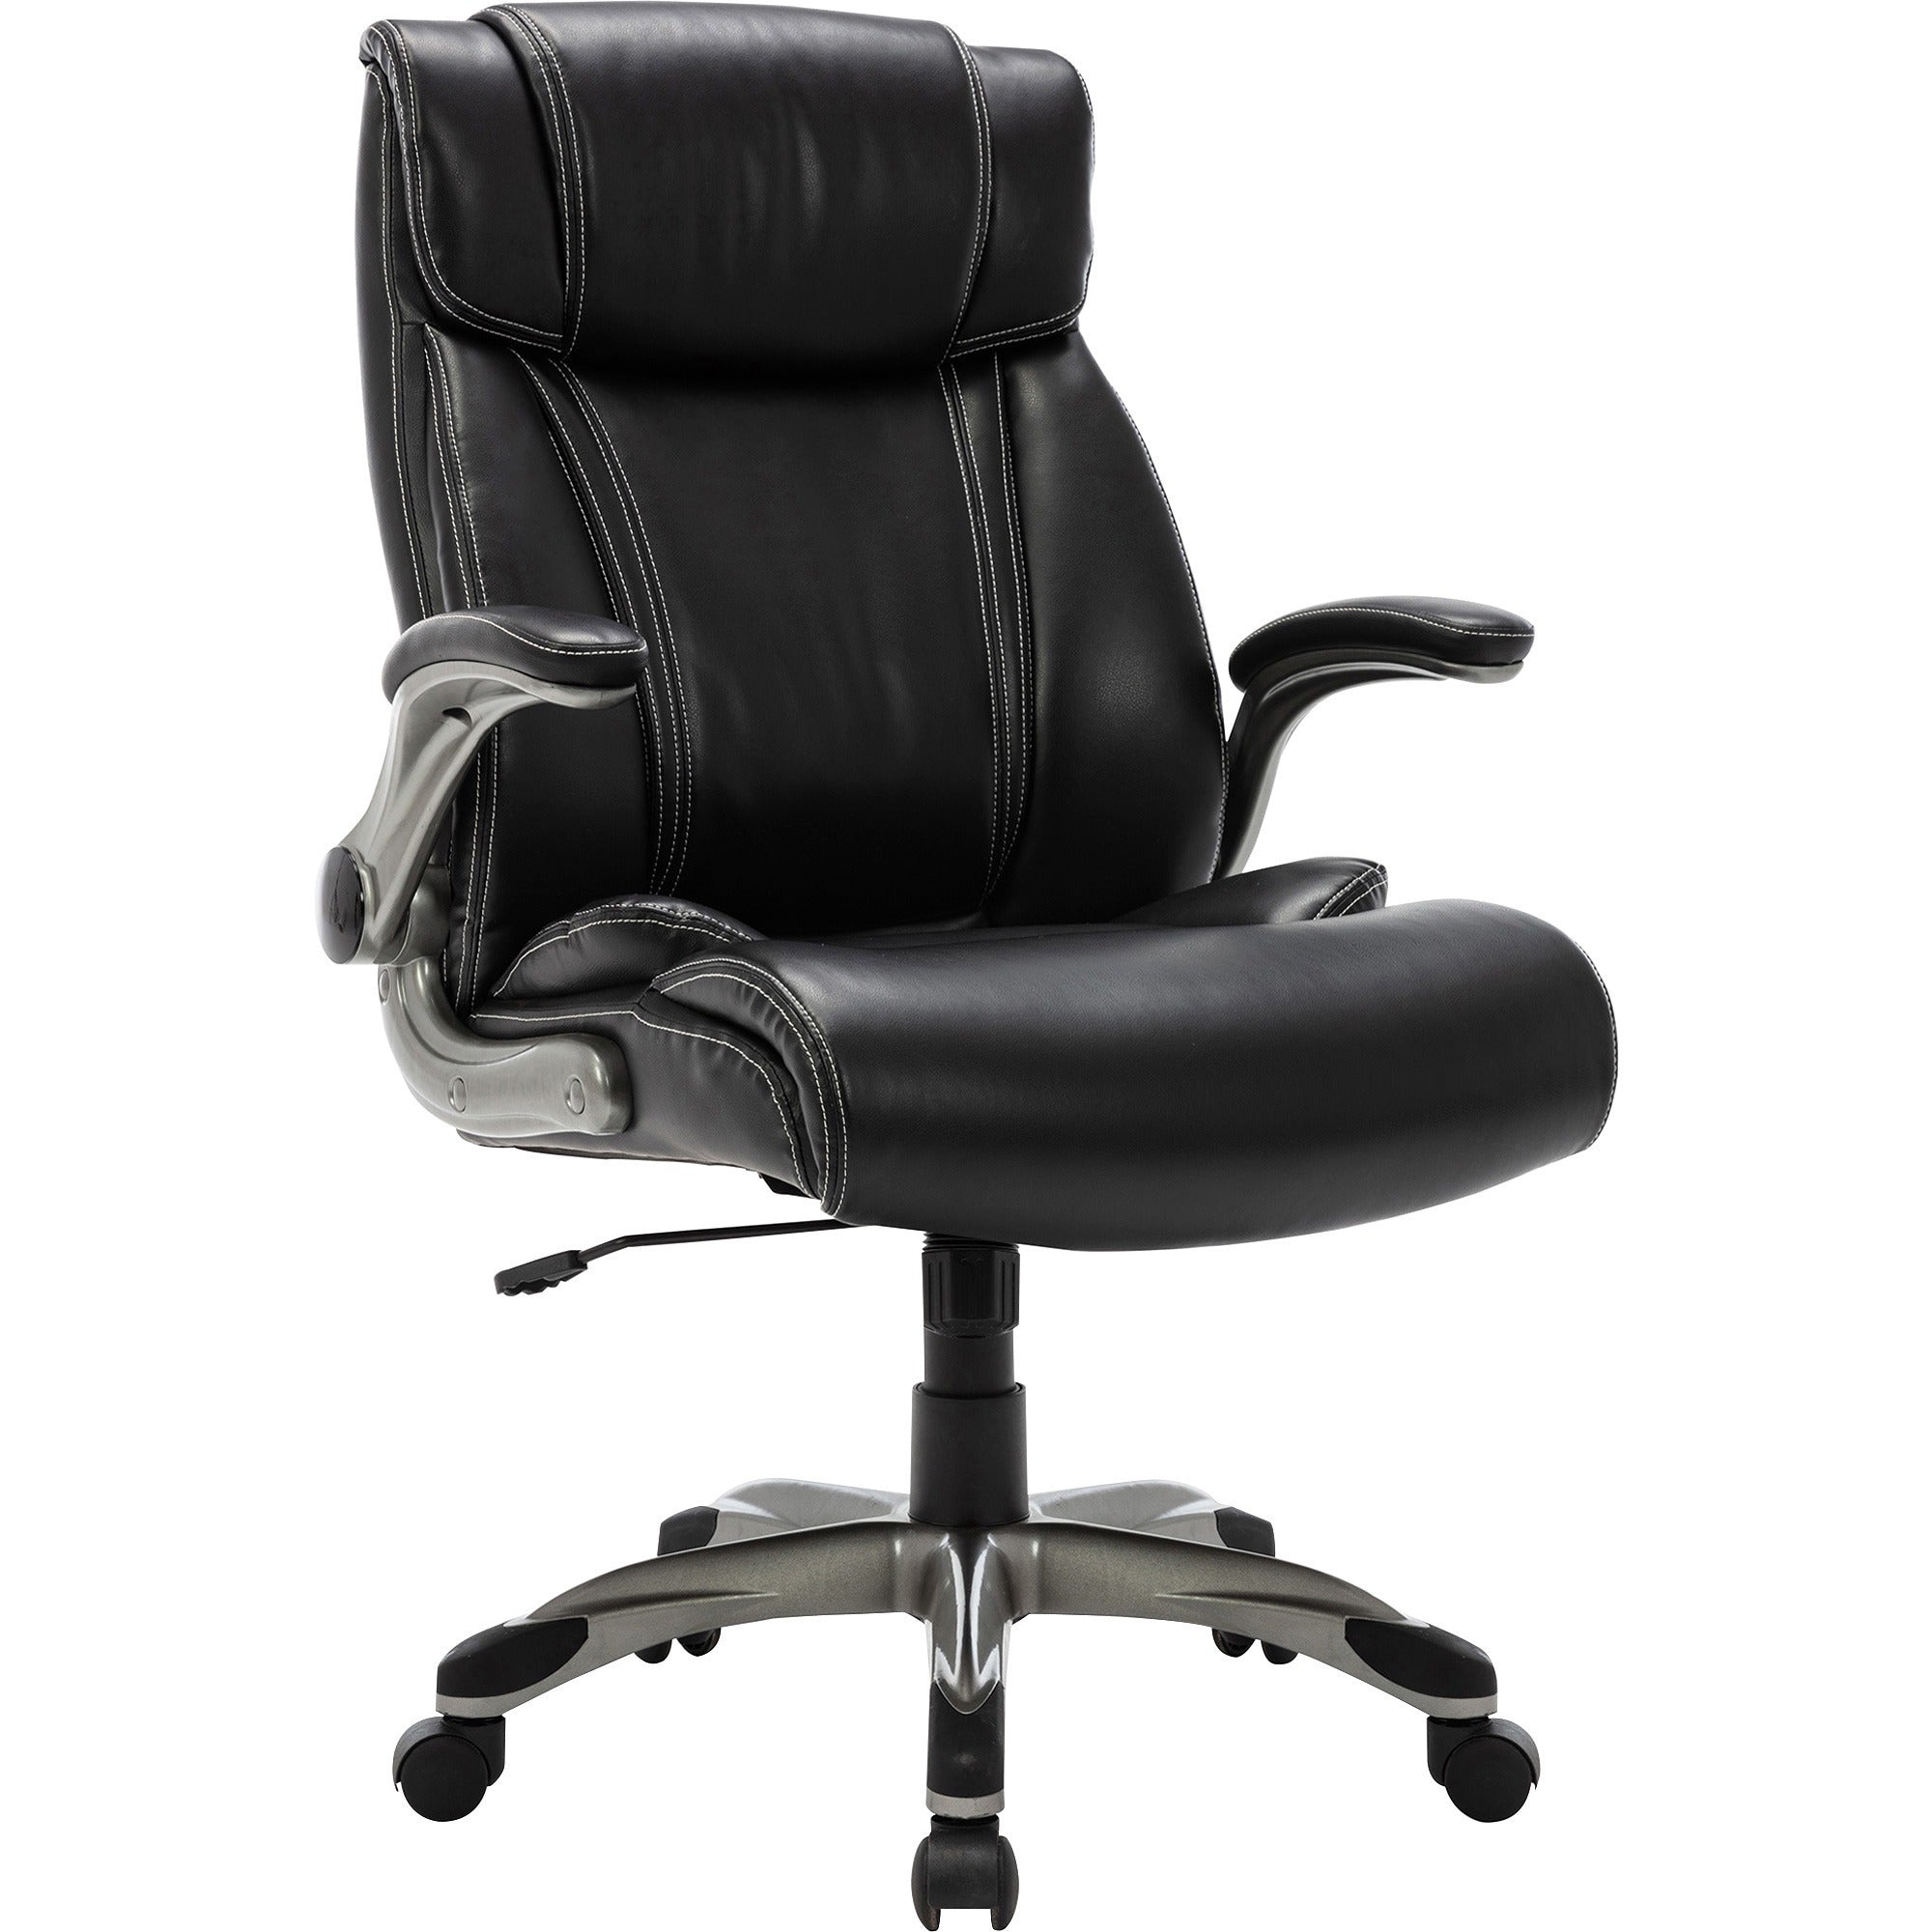 soho-high-back-office-chair-flip-with-armrest-black-bonded-leather-seat-black-bonded-leather-back-high-back-5-star-base-armrest-1-each_llr81803 - 1